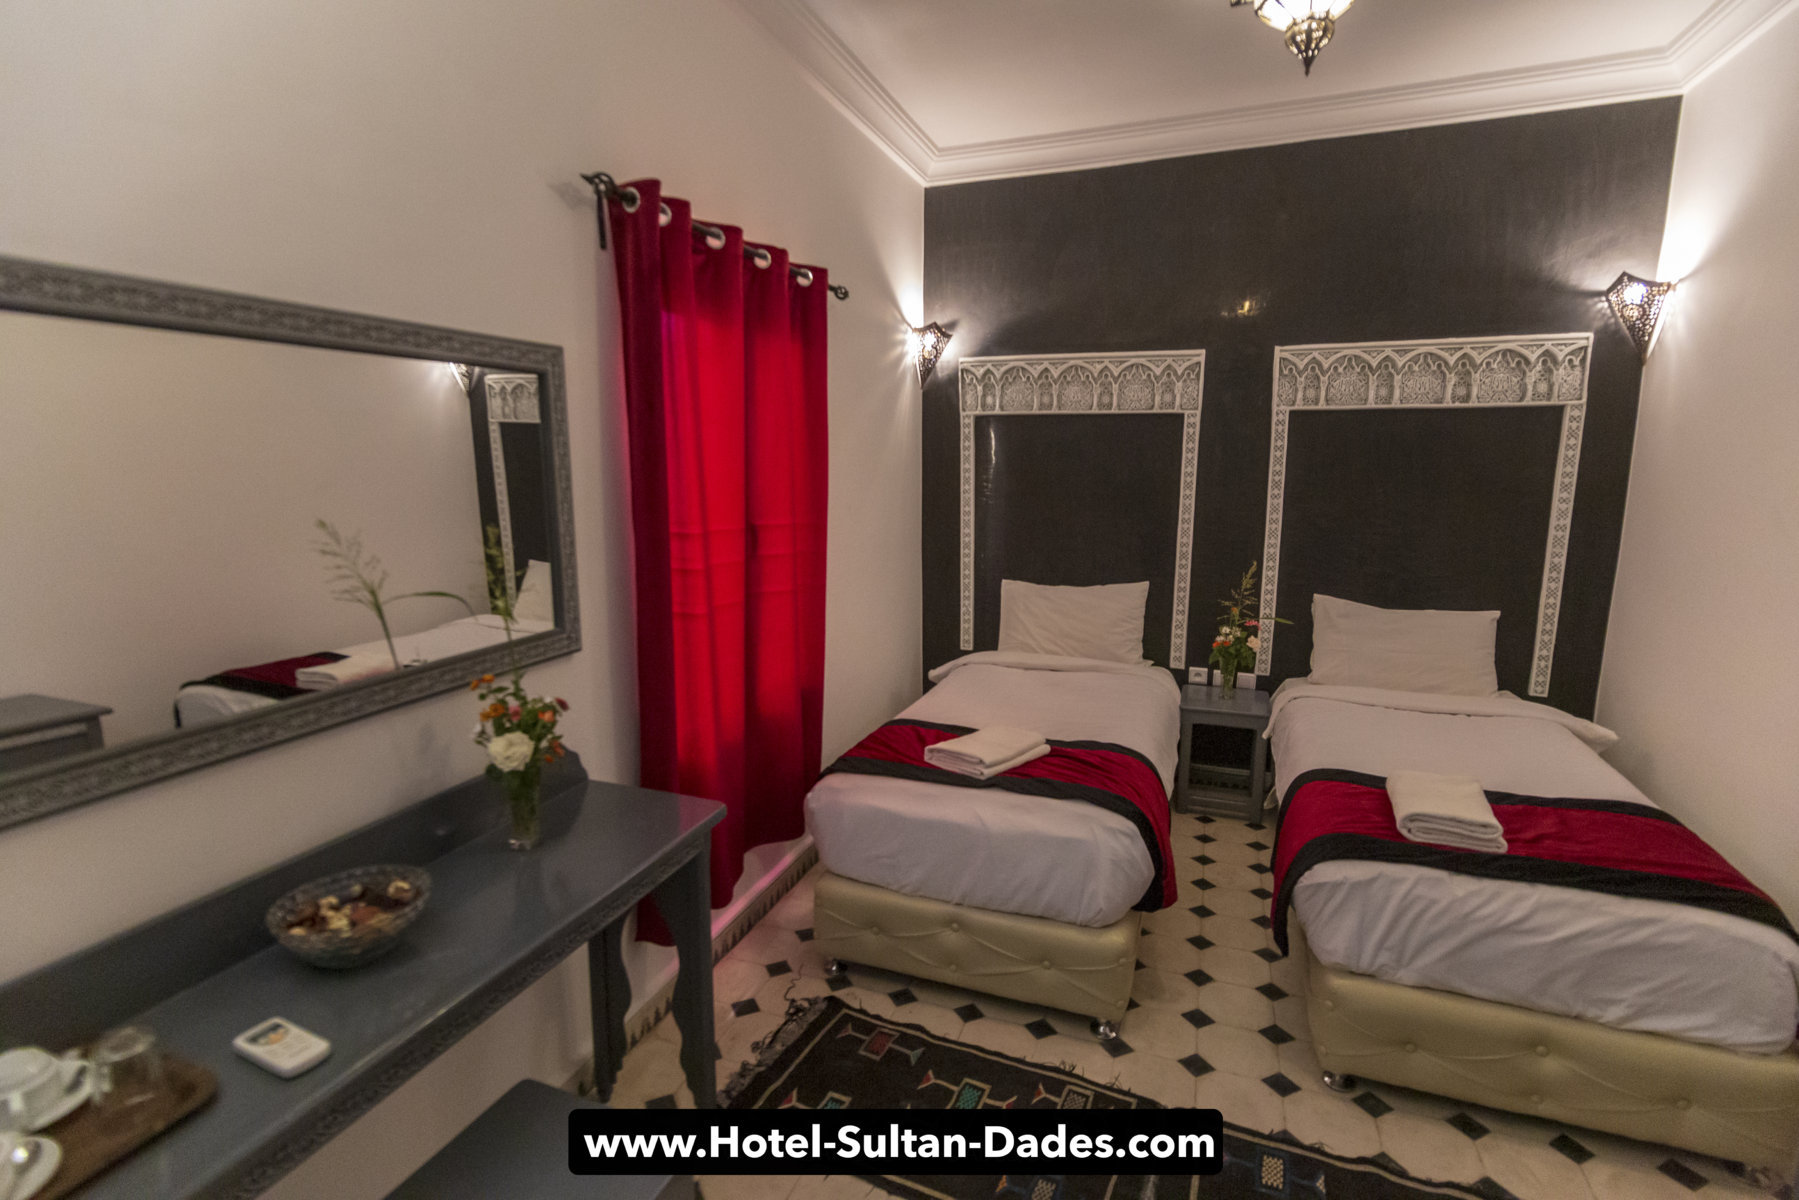 Hotel Sultan Dades Rooms